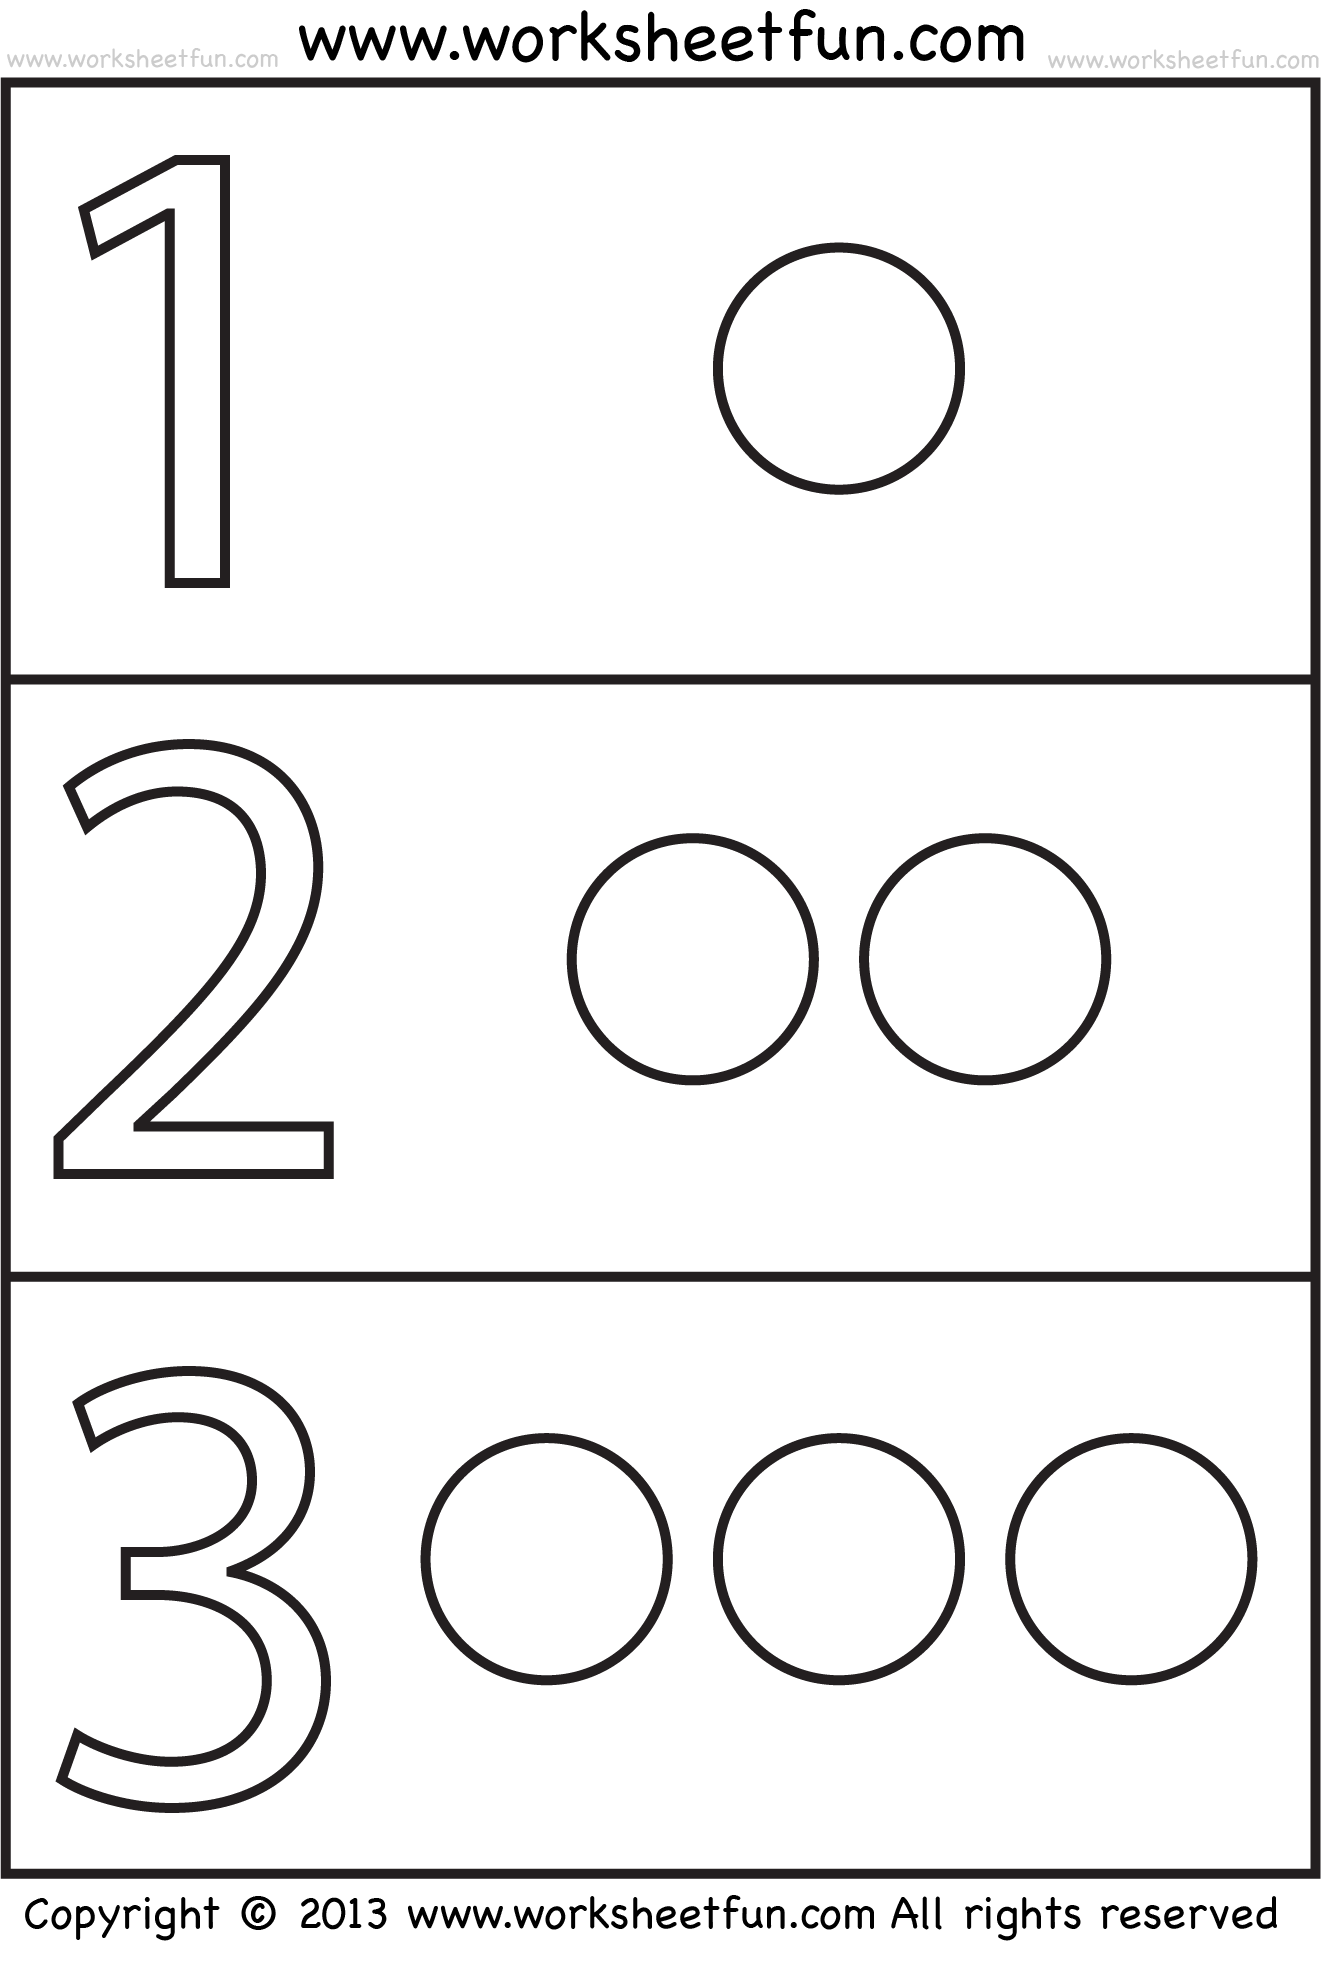 numbers-and-shapes-4-worksheets-free-printable-worksheets-worksheetfun